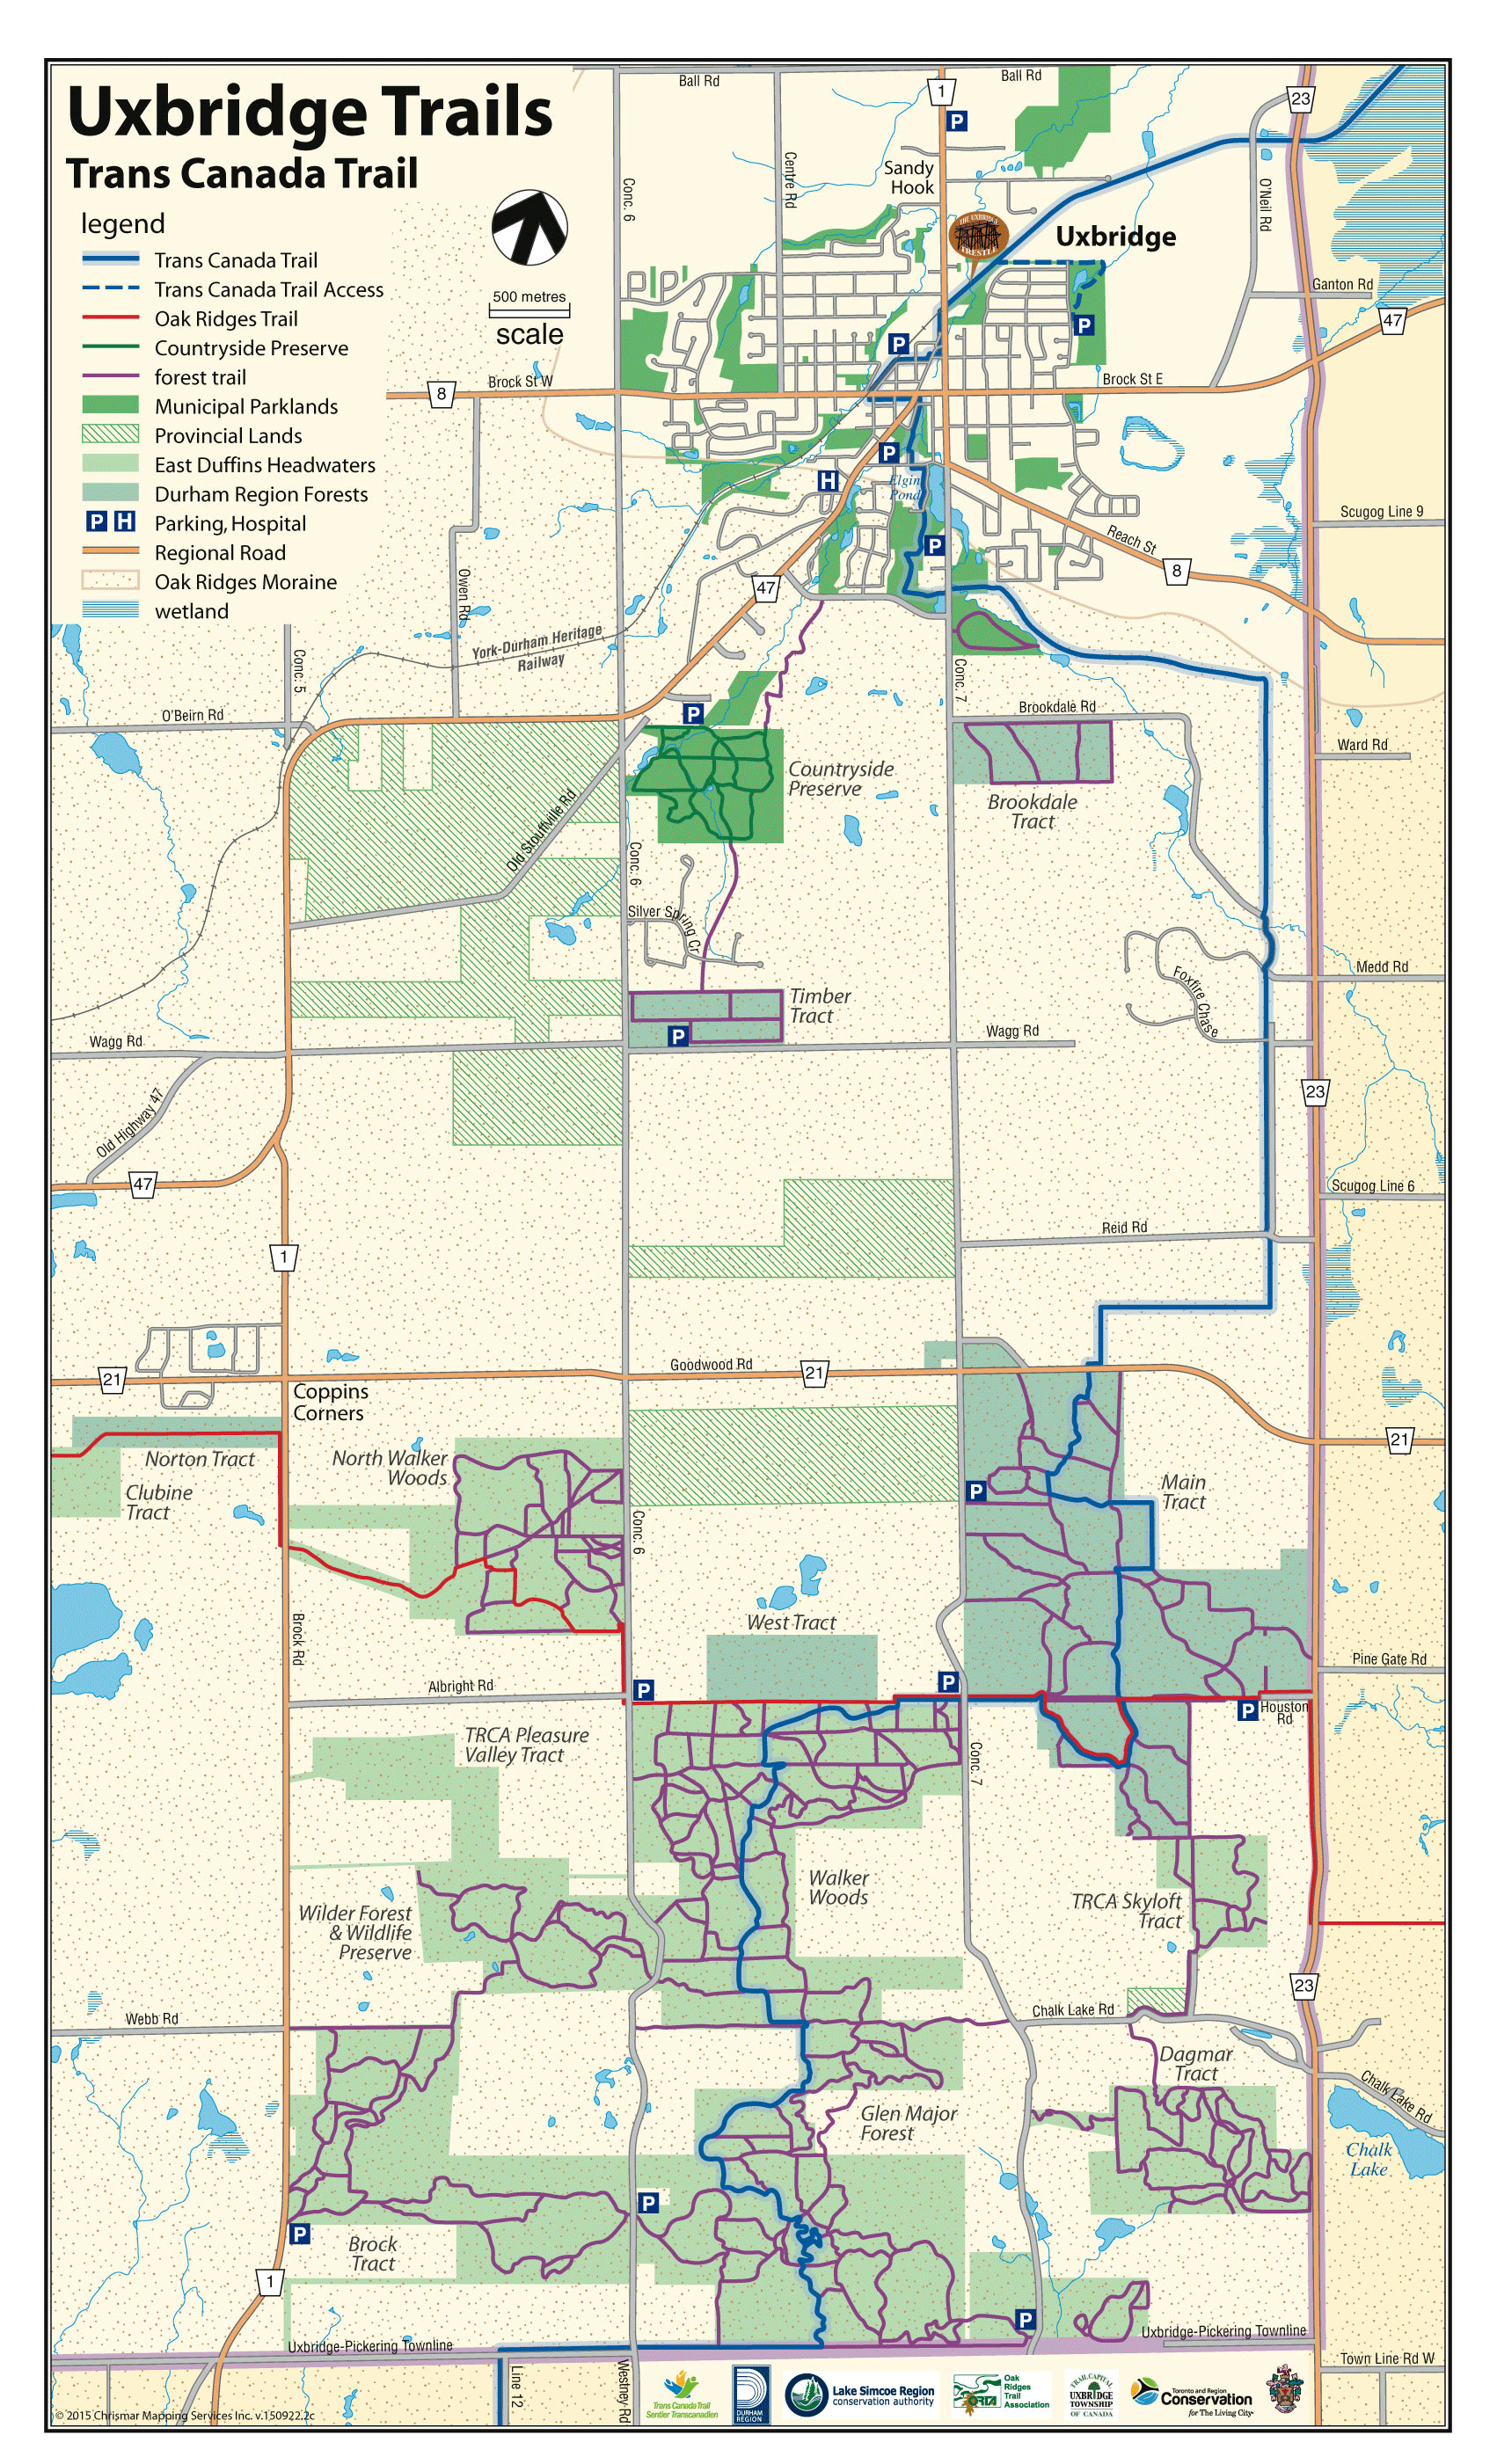 Uxbridge Trans Canada Trail Map 2015